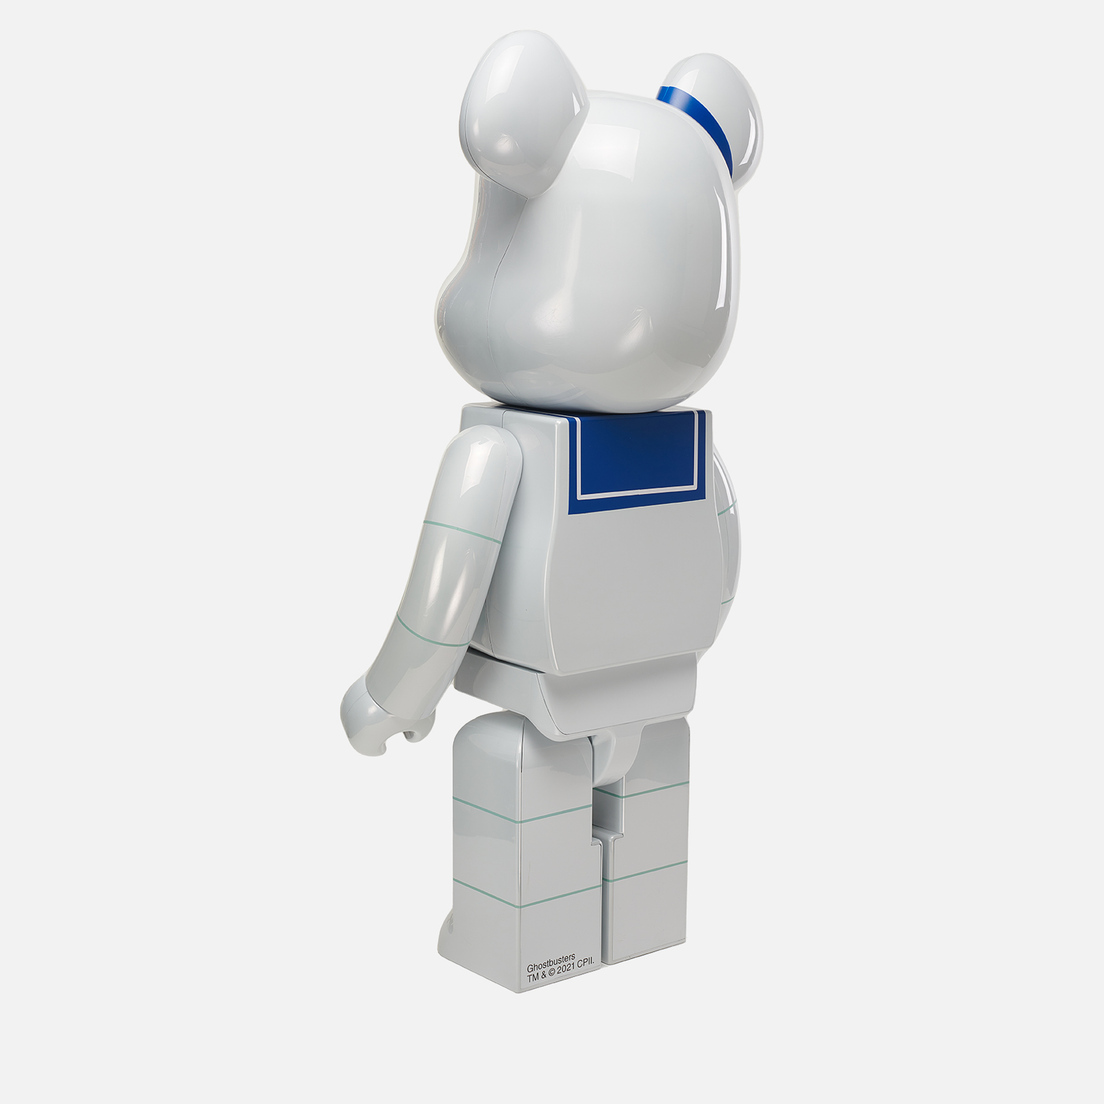 Medicom Toy Игрушка Stay Puft Marshmallow Man White Chrome 1000%